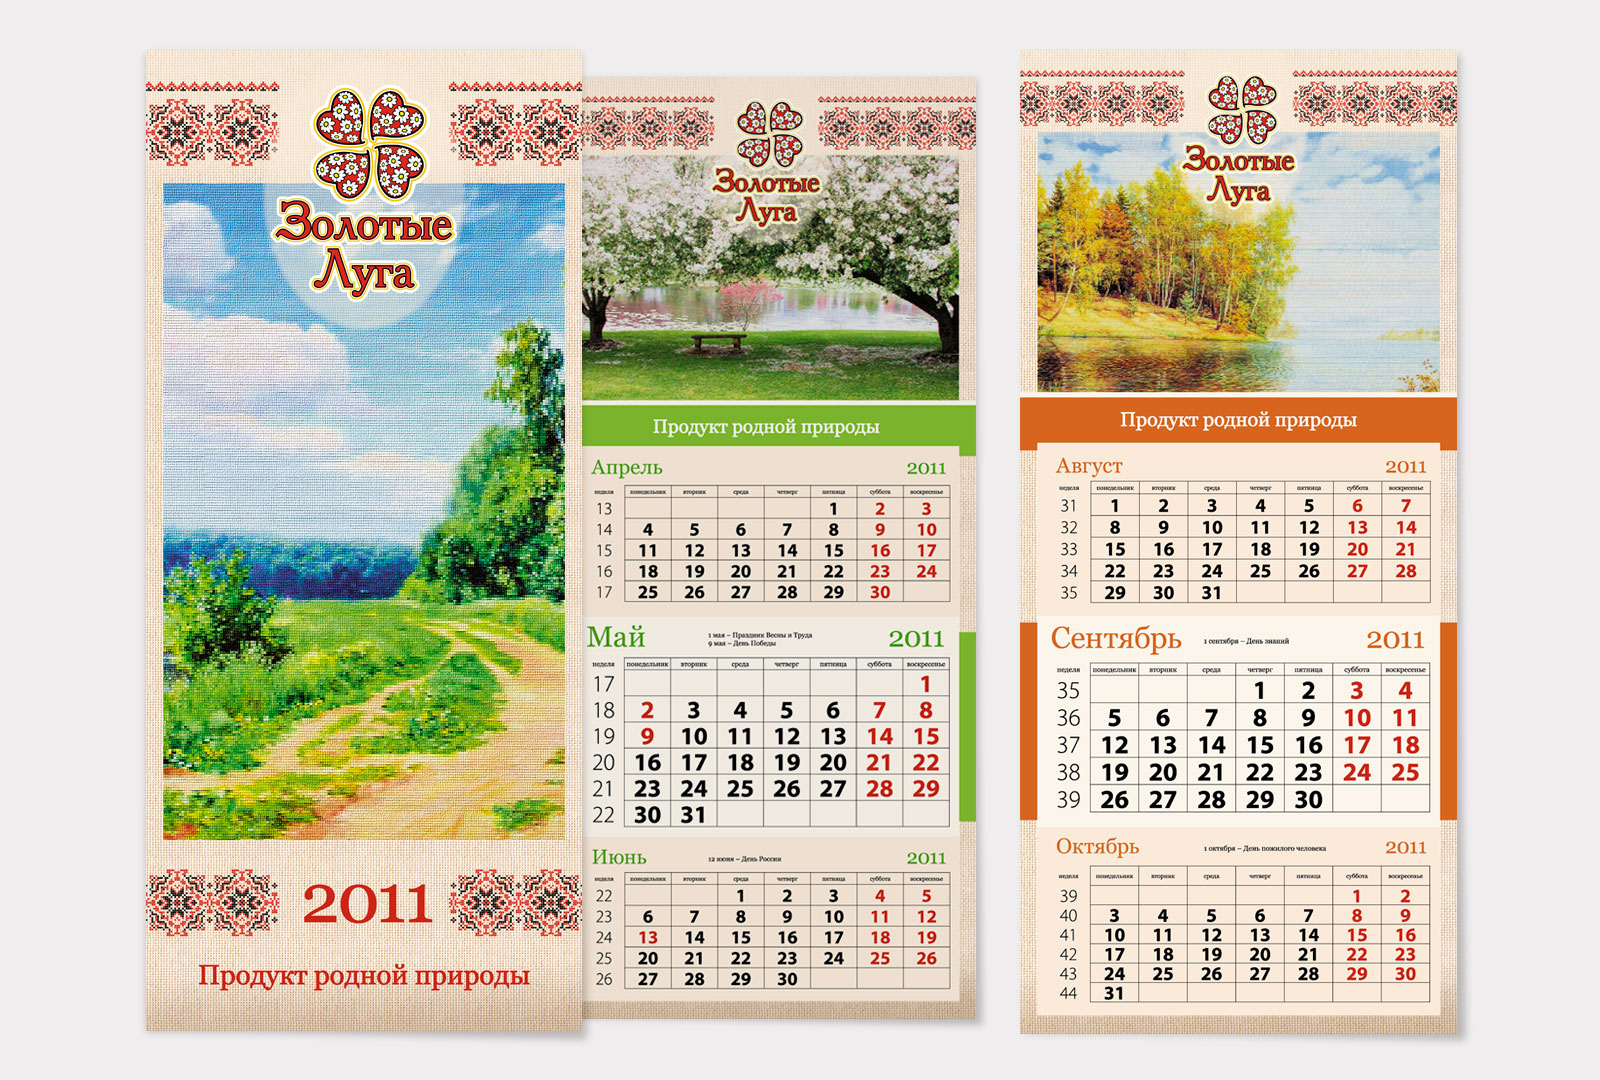 Золотые луга - календарь 2011